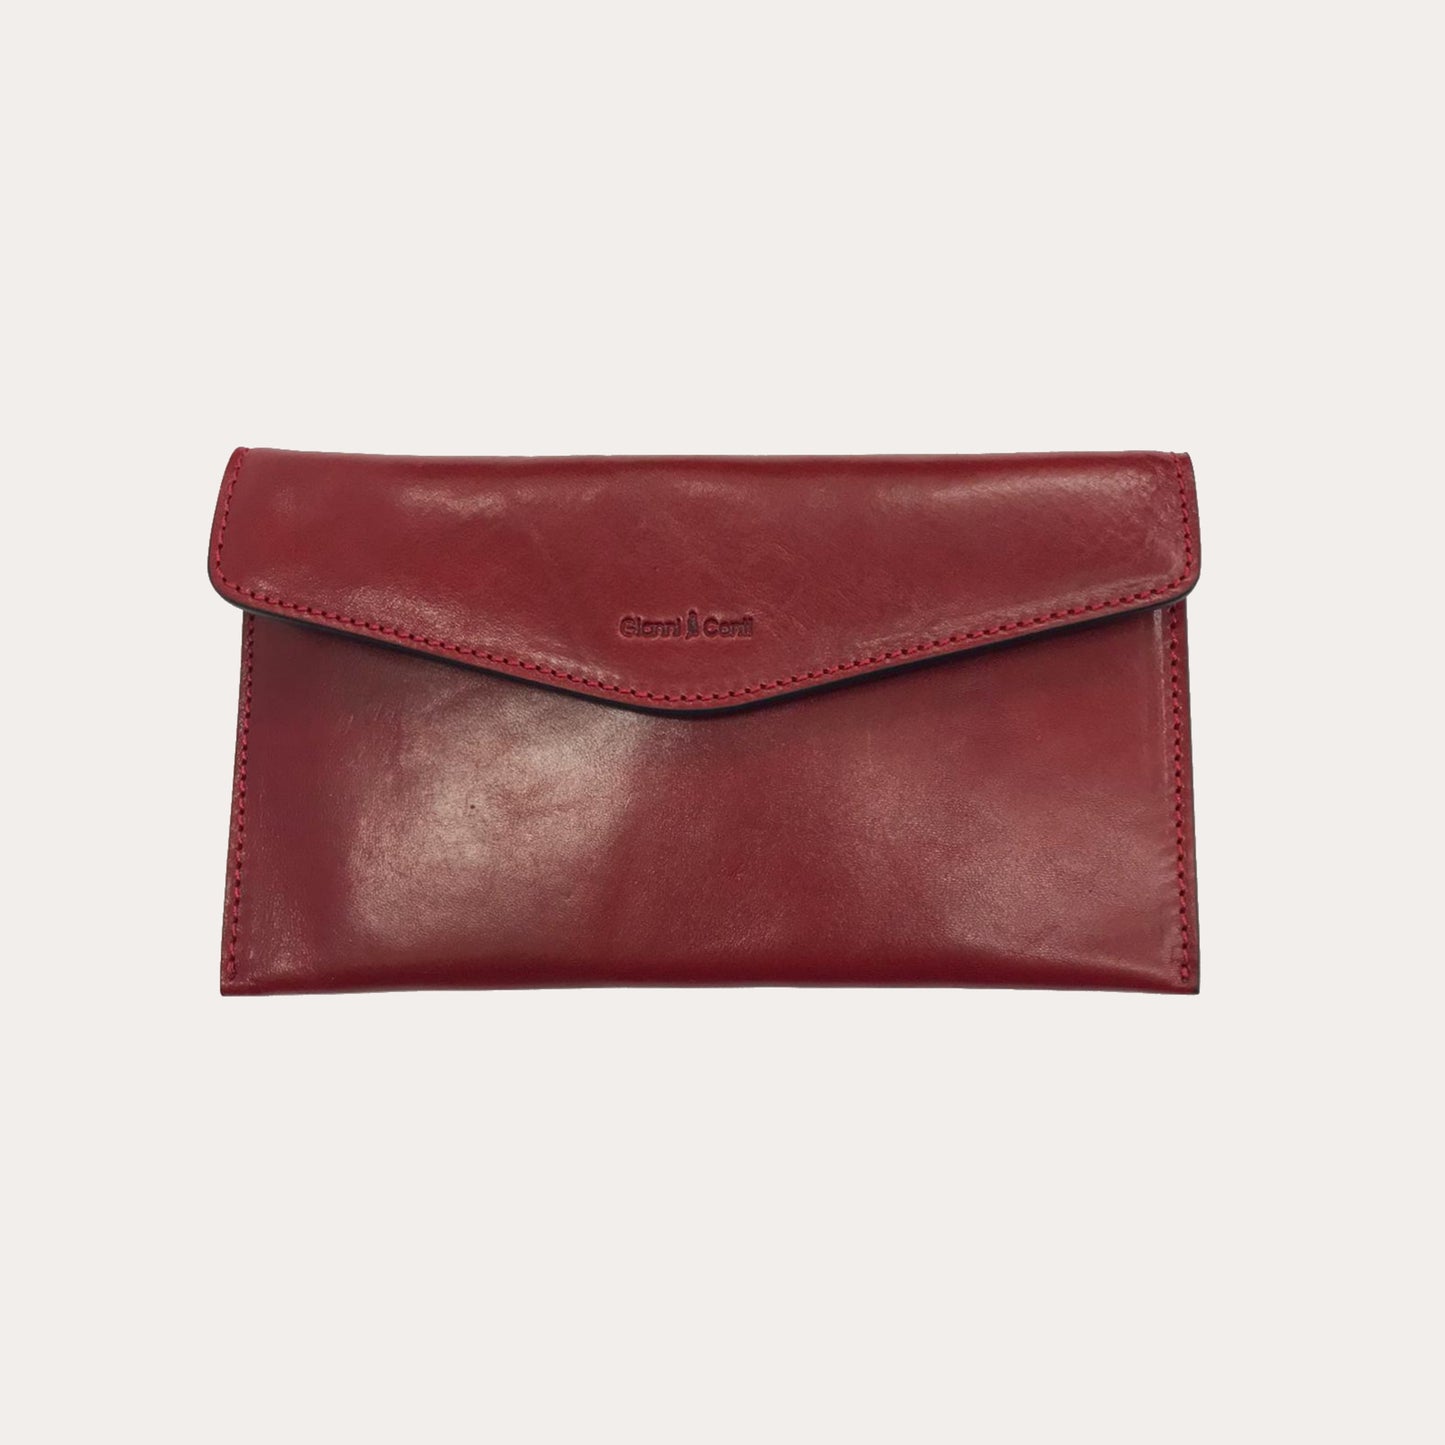 Gianni Conti Red Leather Purse